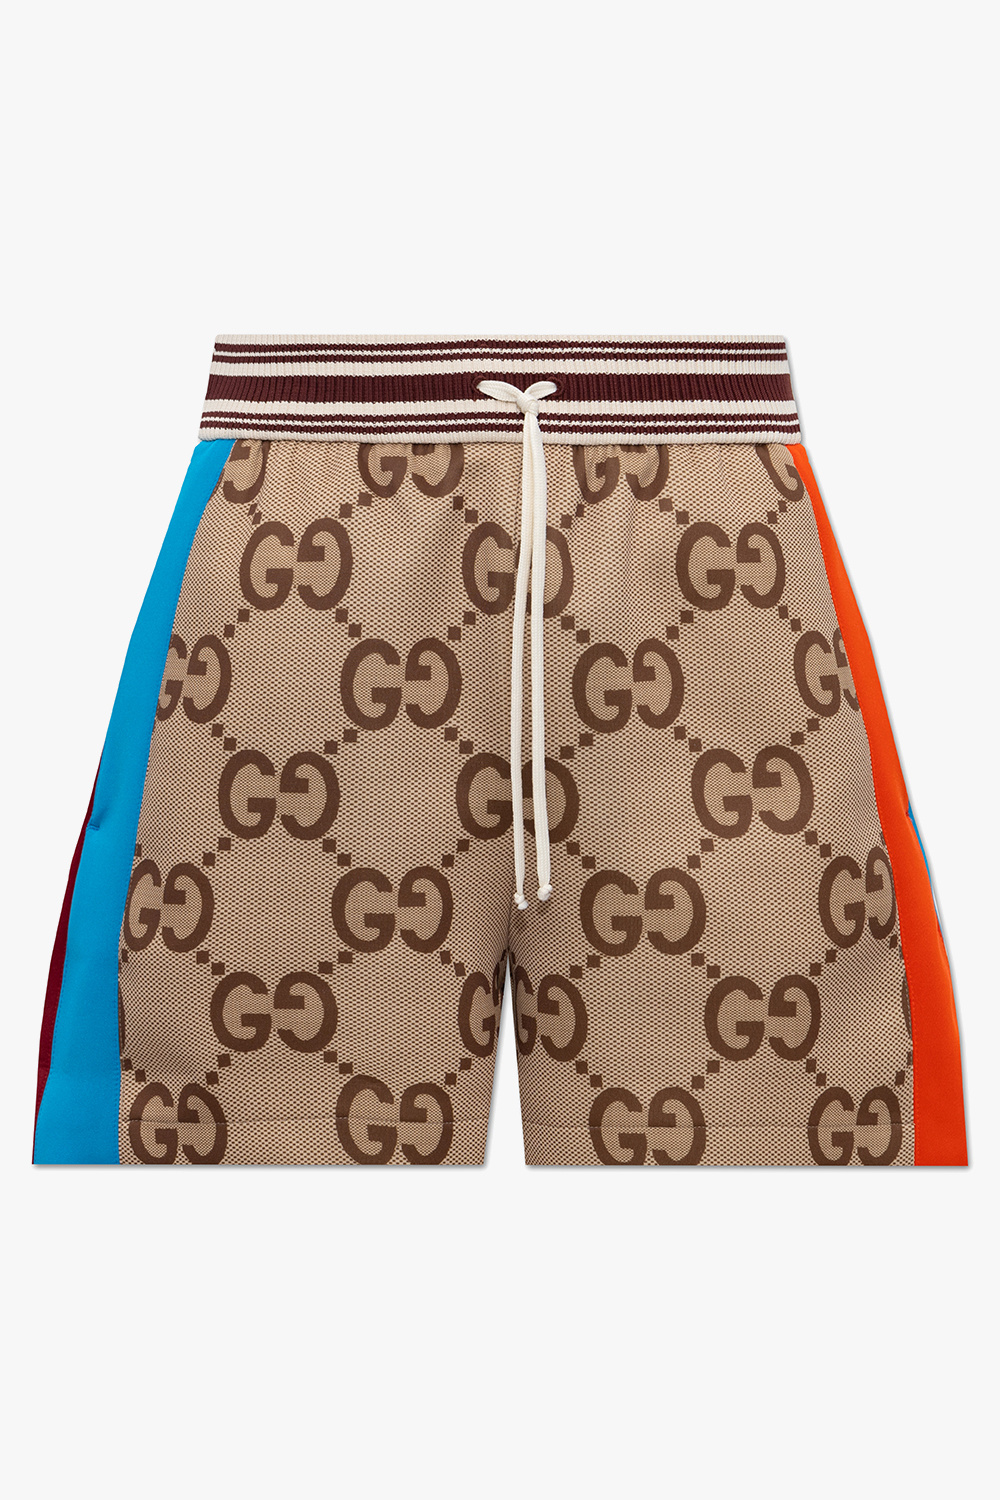 The Market x LV x Gucci, Shorts, Market X Lv Shorts Vip Club Edition